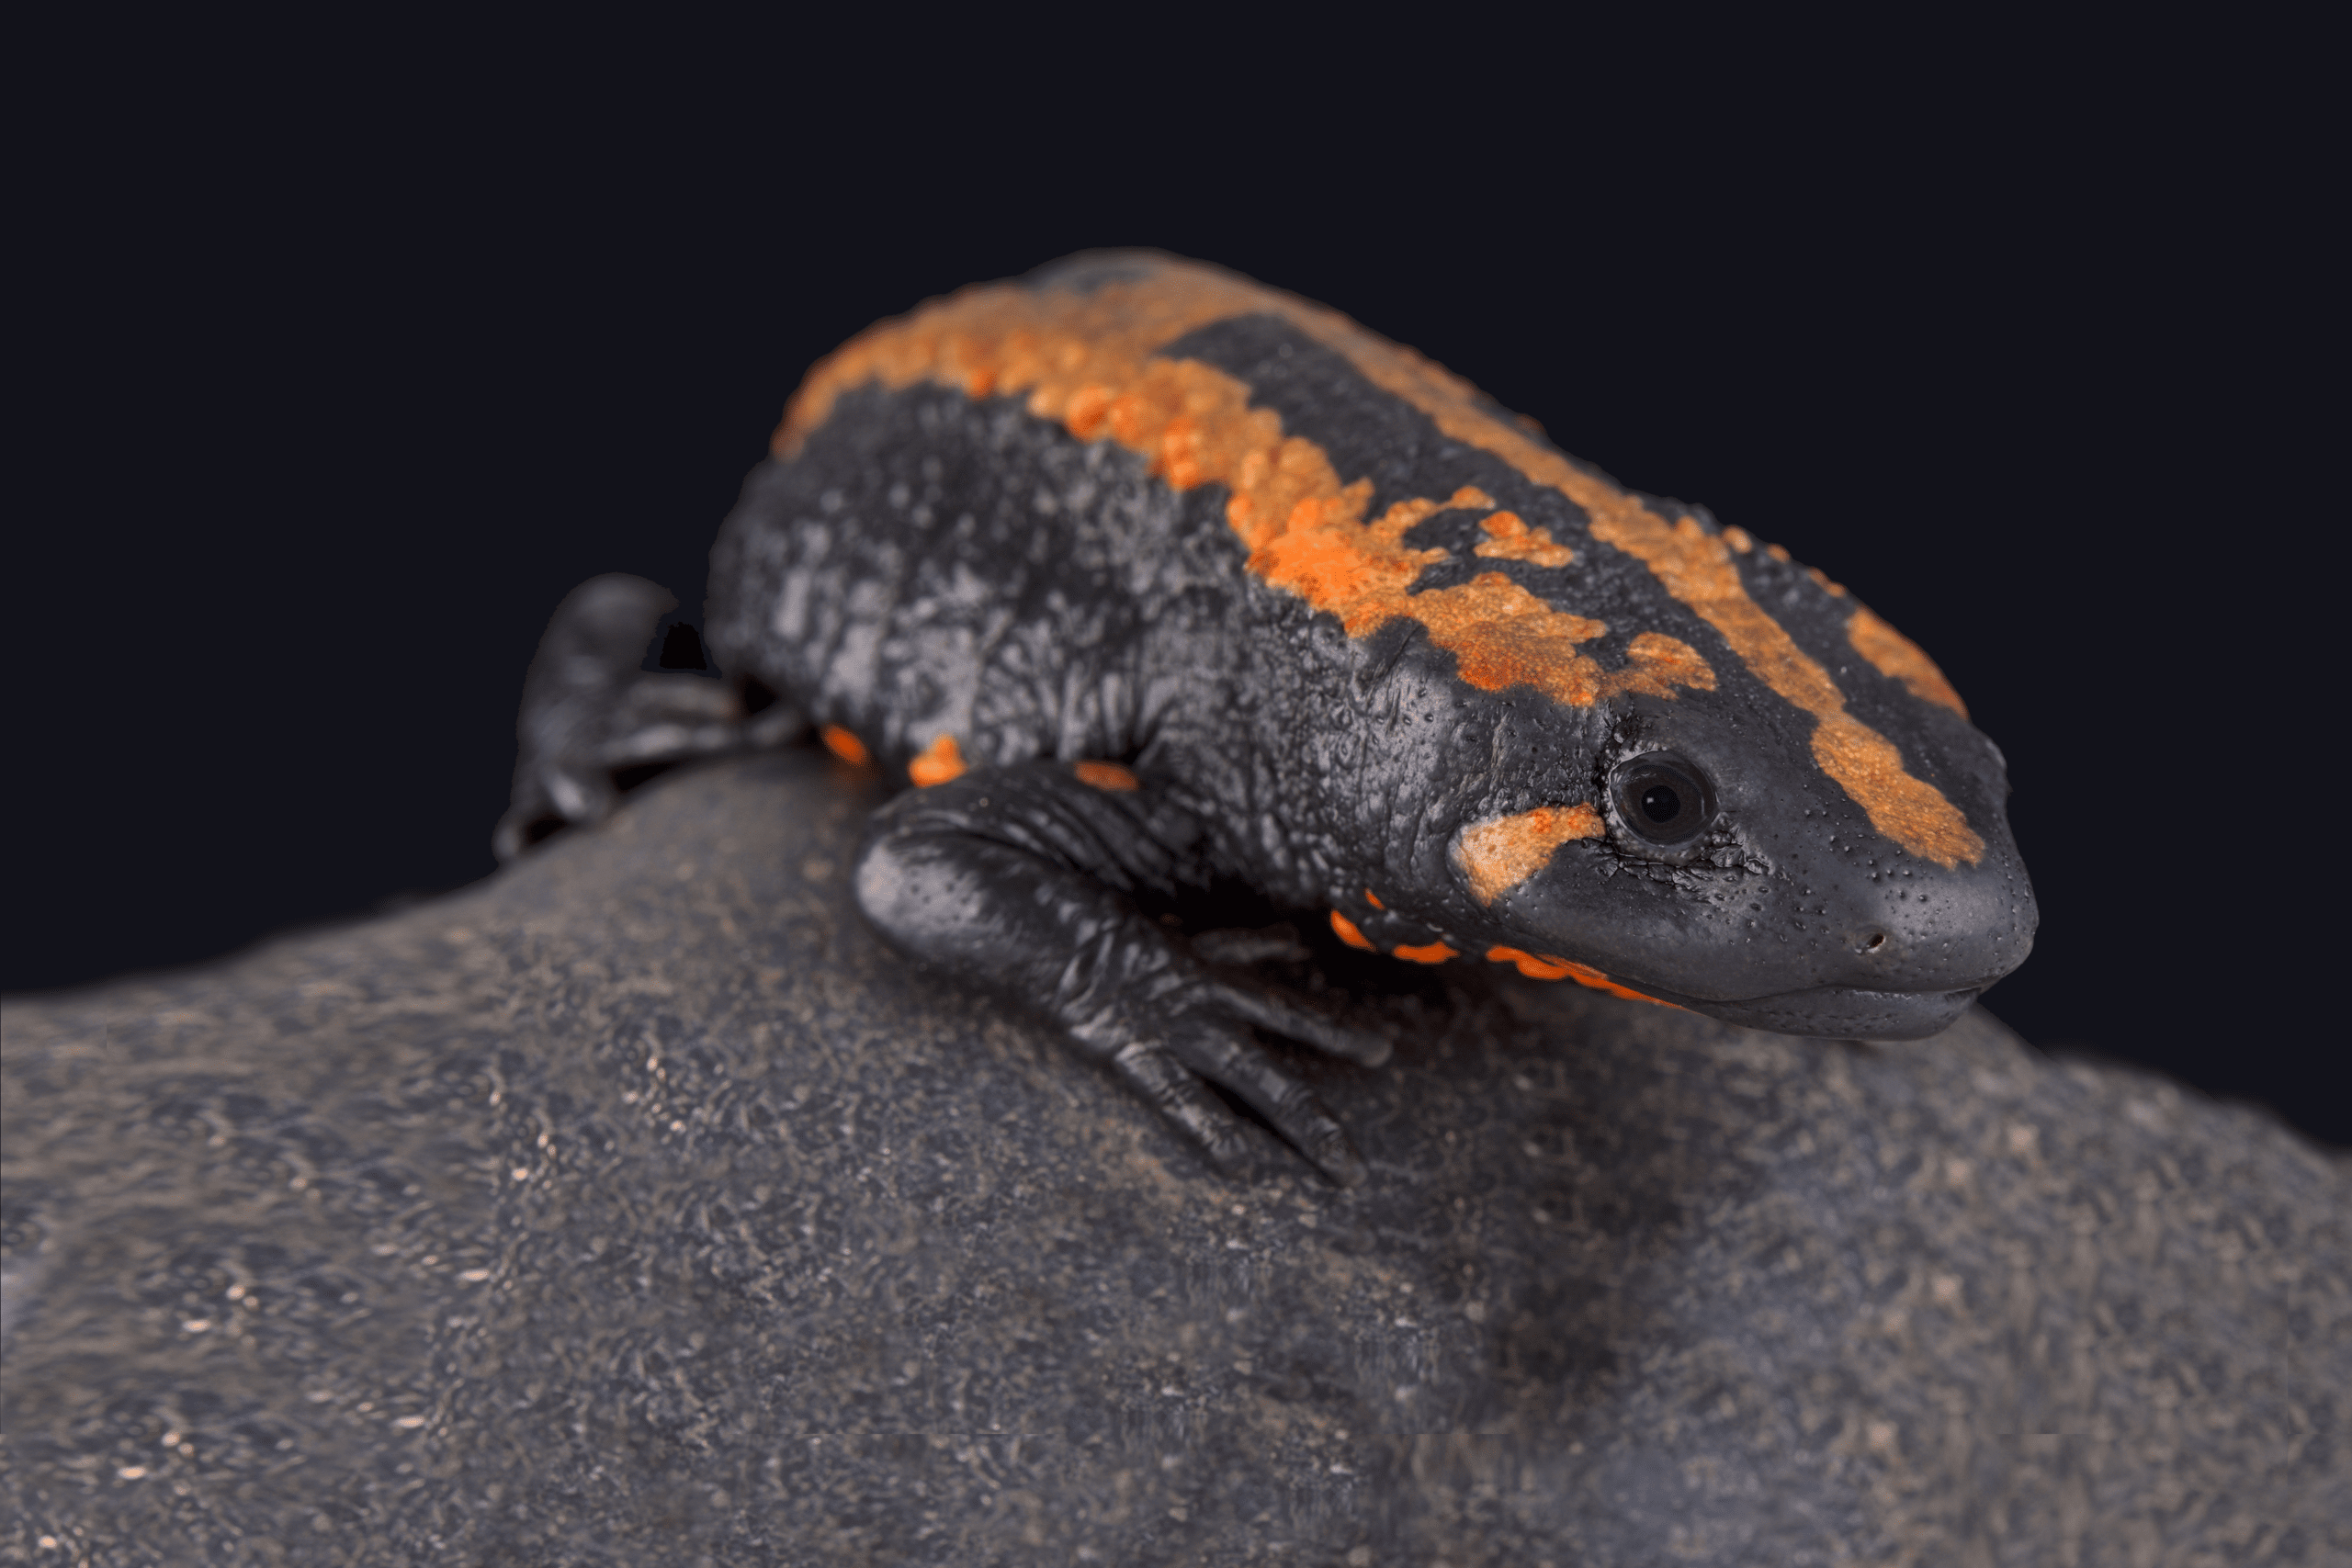 Laos warty newt (Laotriton laoensis) | Shutterstock